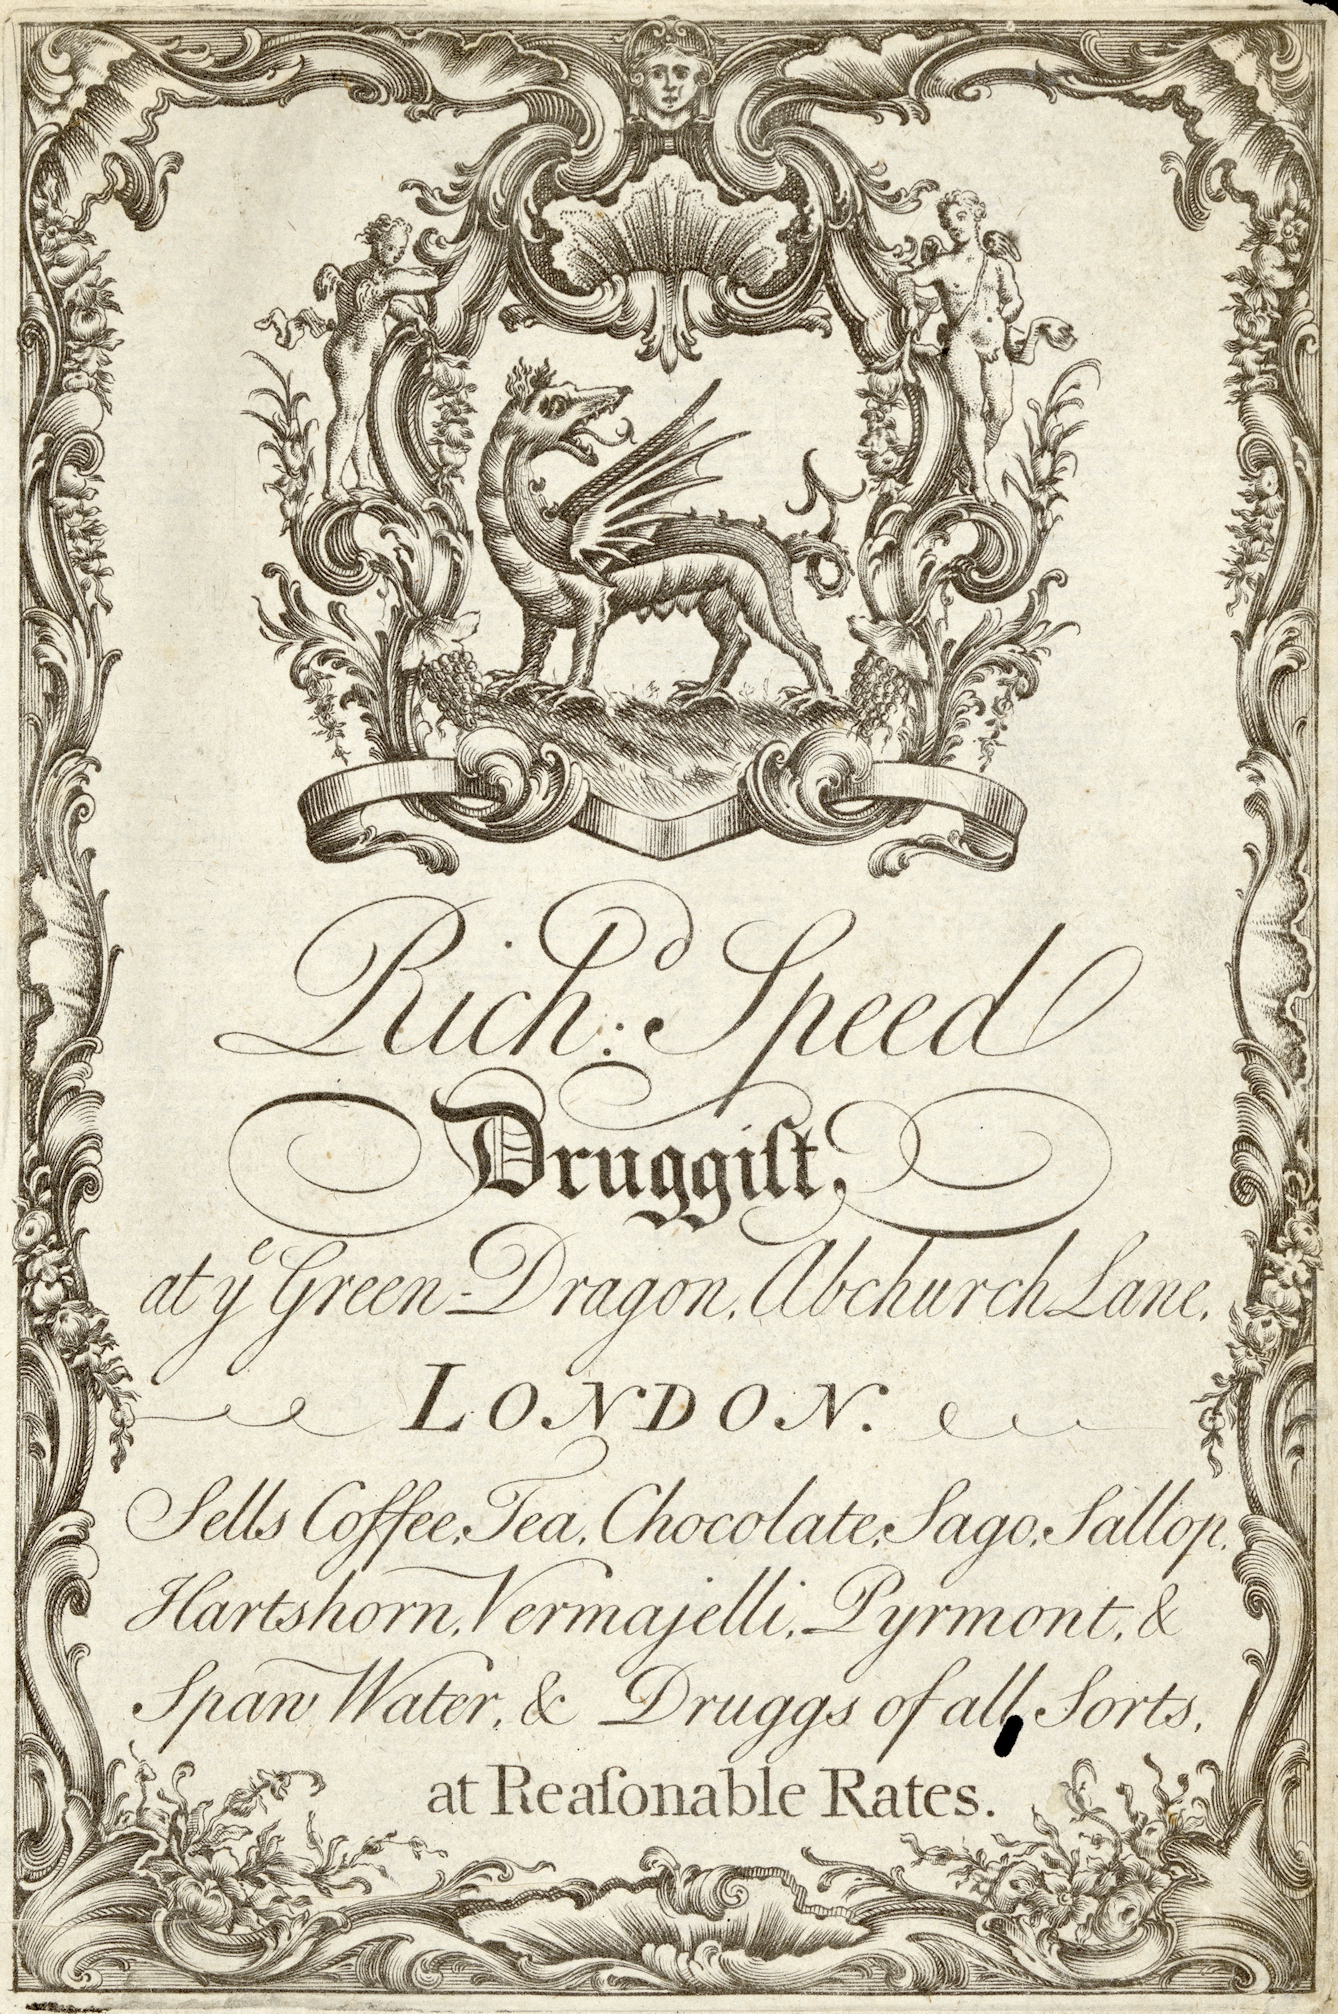 18th century trade card for Richard Speed, druggist